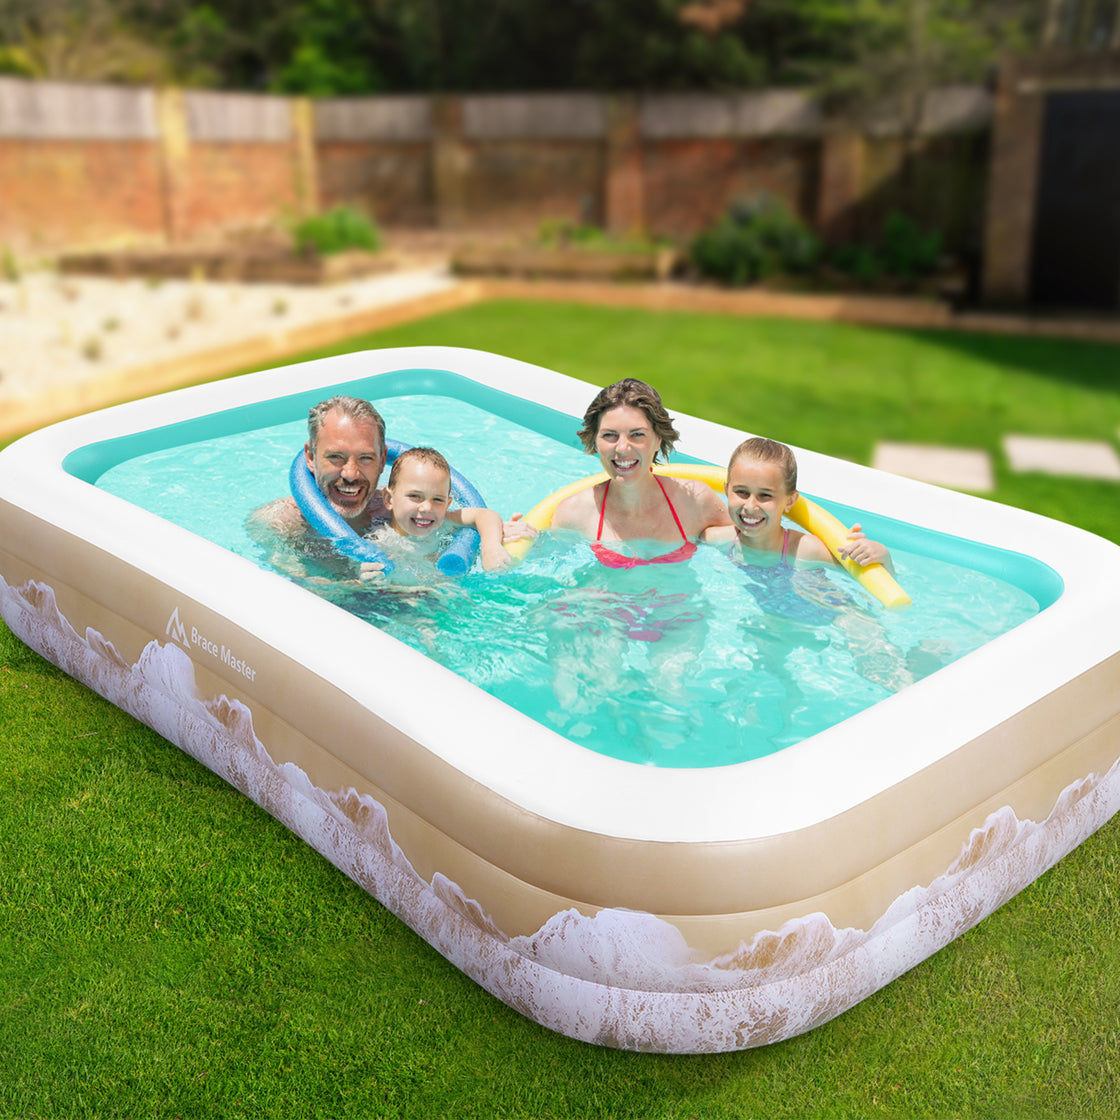 Brace Master Inflatable Family Kiddie Swimming Pool 241cm*142cm*56cm